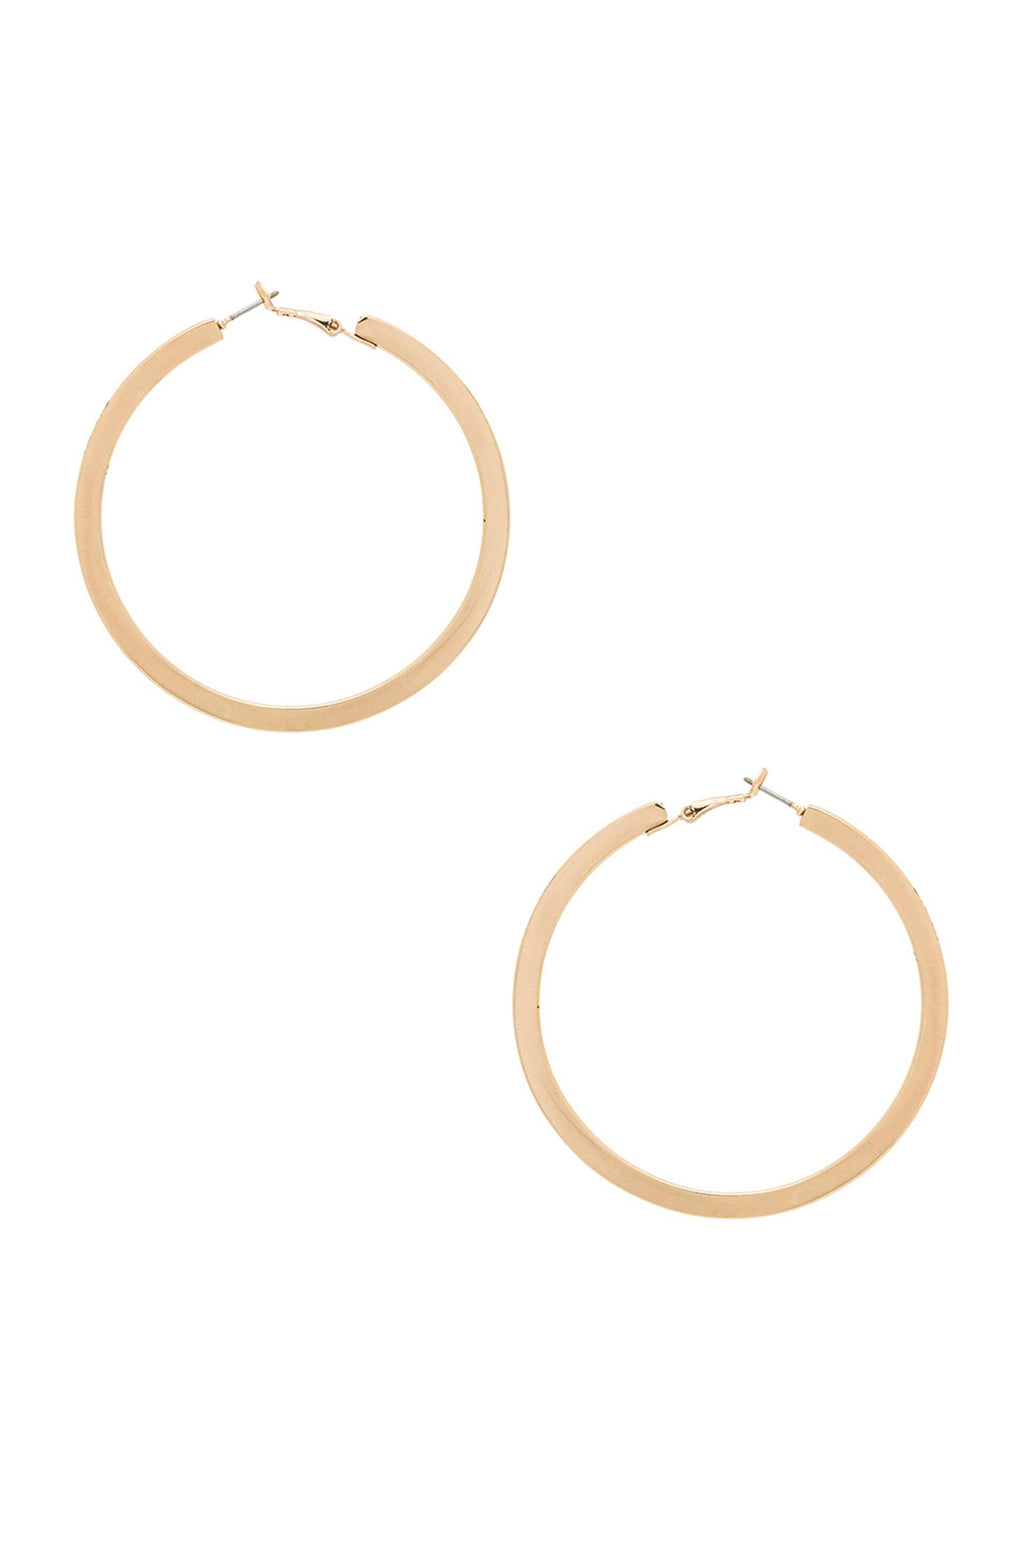 Calypso 18k Gold Plated Hoop Earrings - The Gallant Way